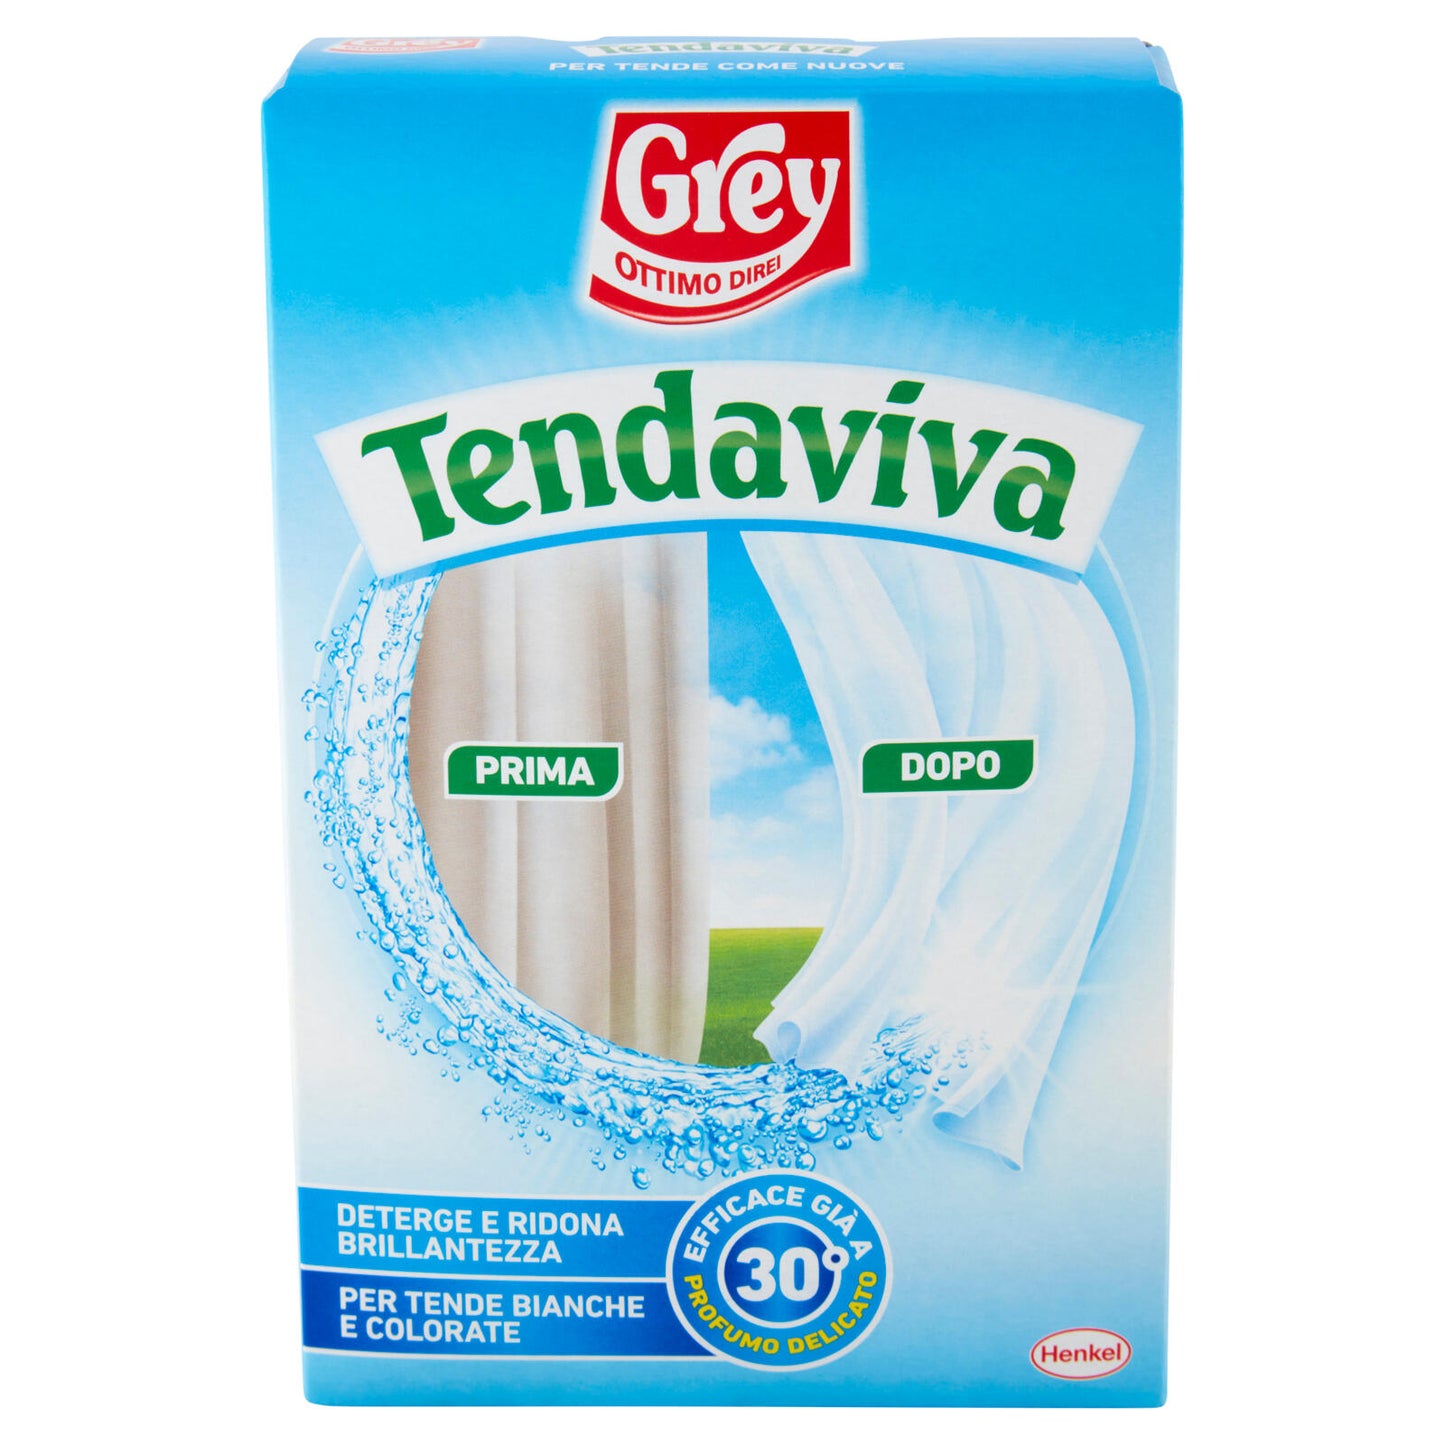 GREY Tendaviva 500 g